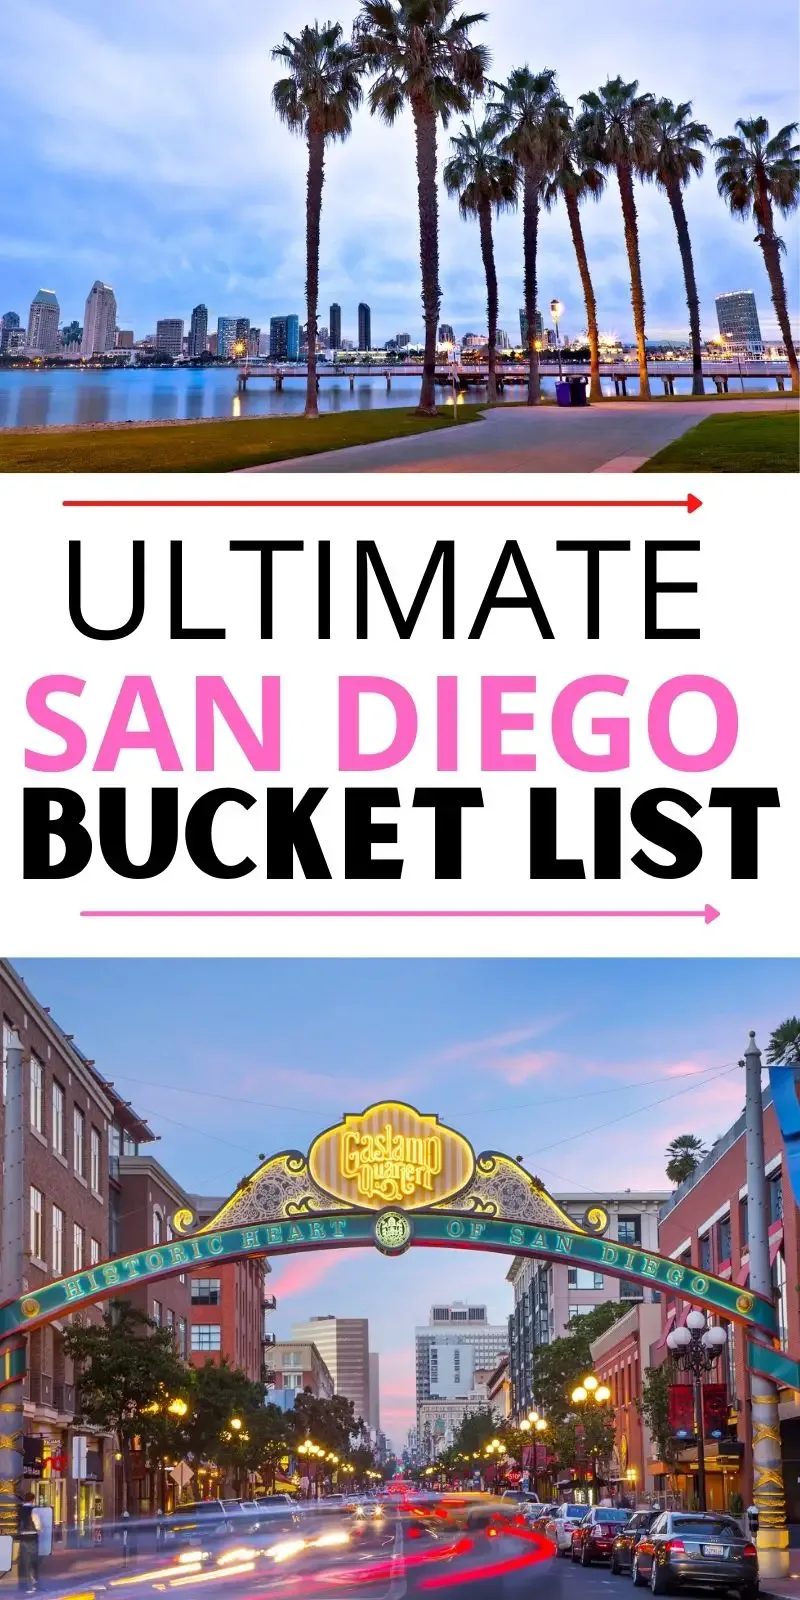 The ultimate San Diego Bucket List